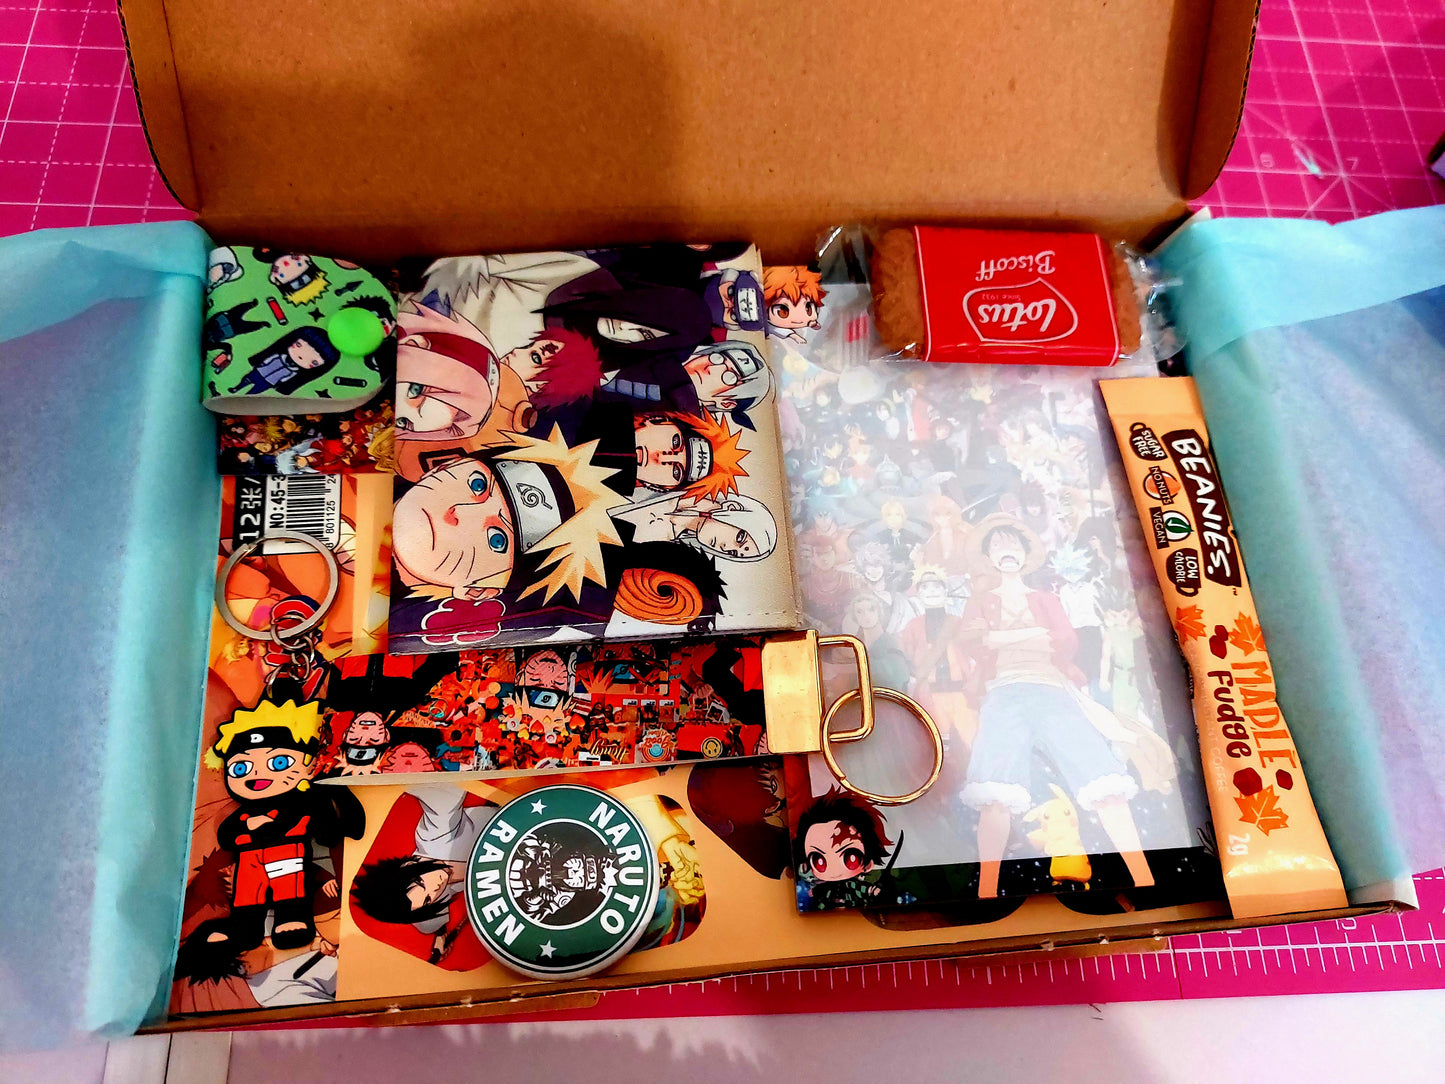 NARUTO ANIME Inspired Gift Box | anime gifts, manga, care package, anime birthday gift